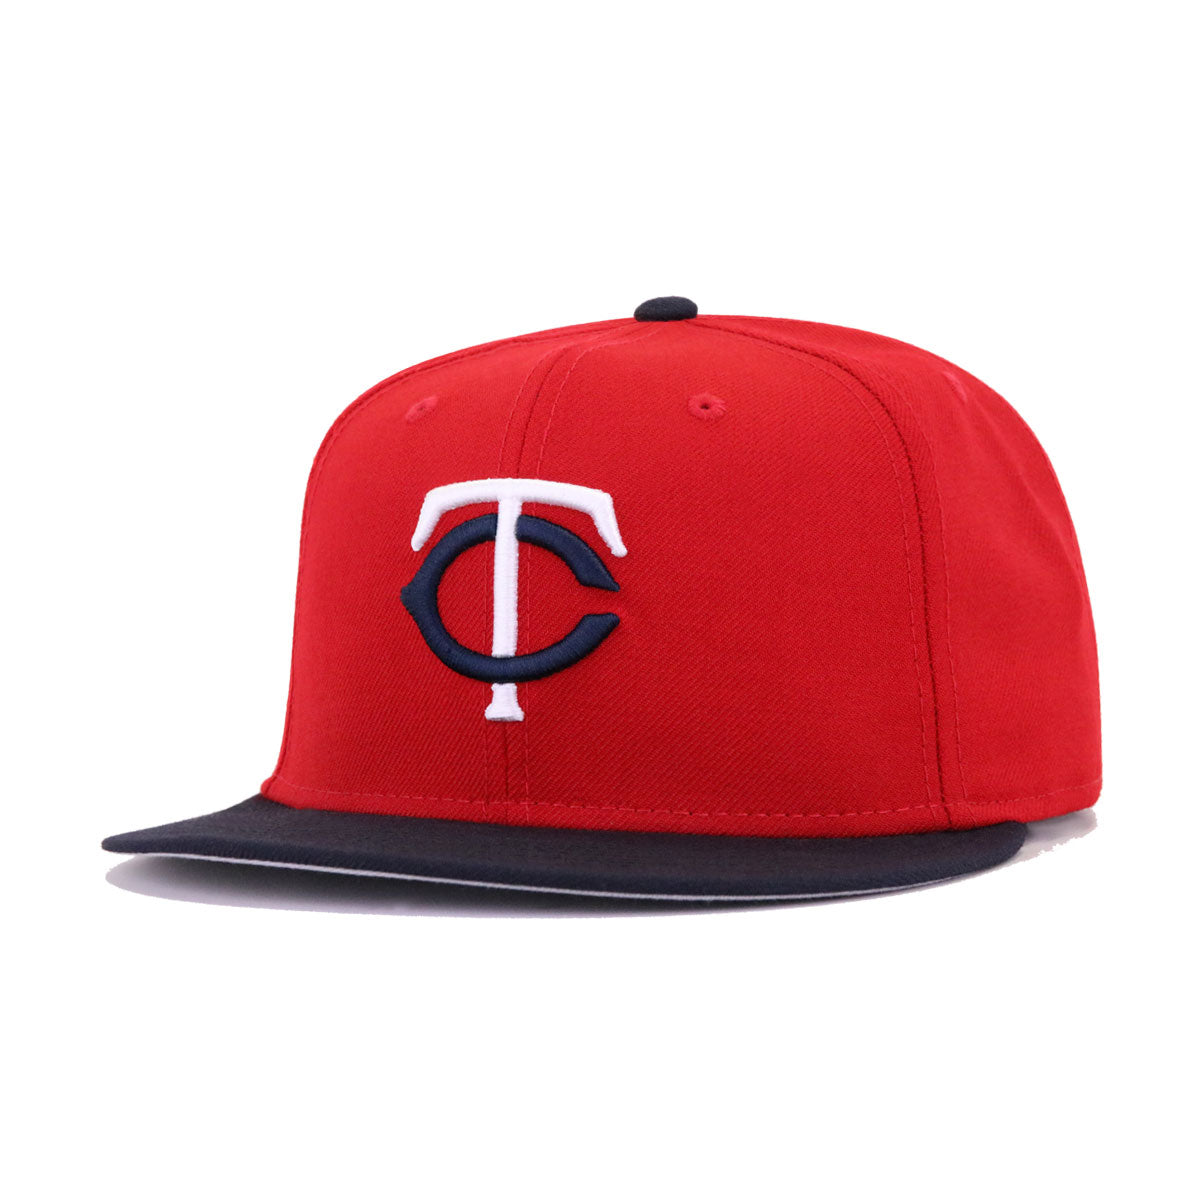 Cincinnati Reds Hat Fitted 7 1/4 White Red Brim MLB American Needle